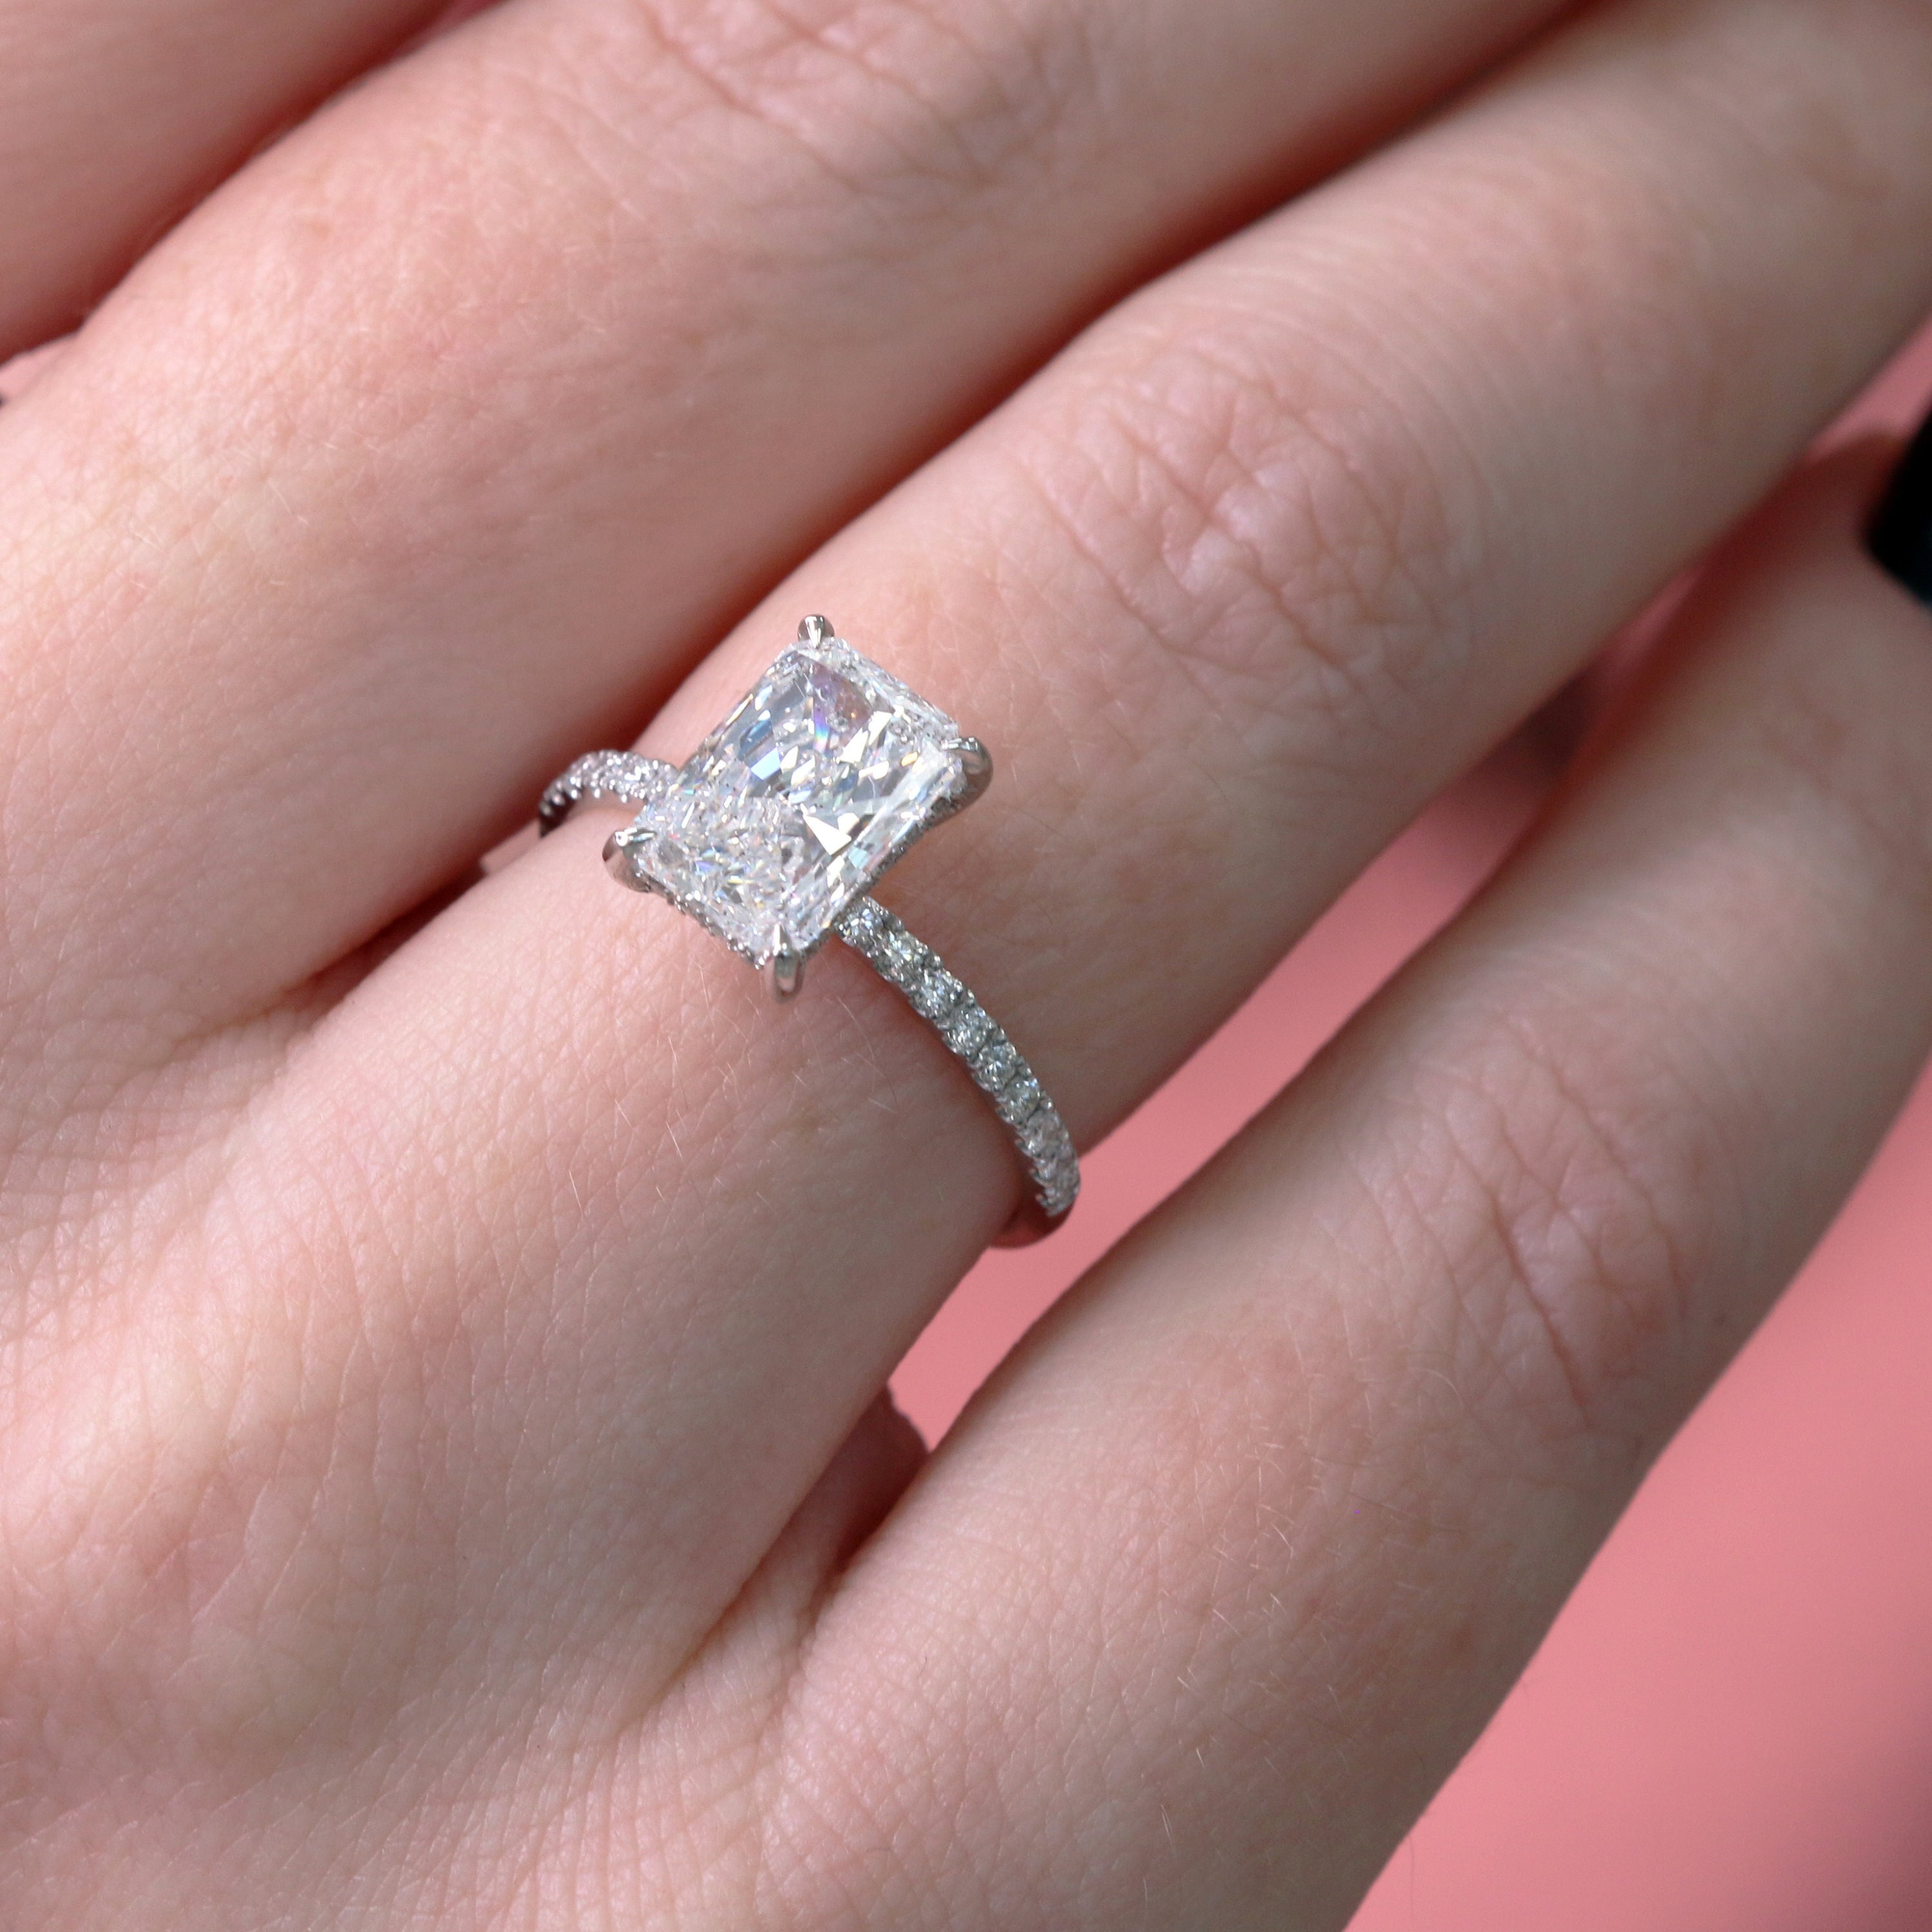 Campagna 2 carat elongated radiant cut engagement ring